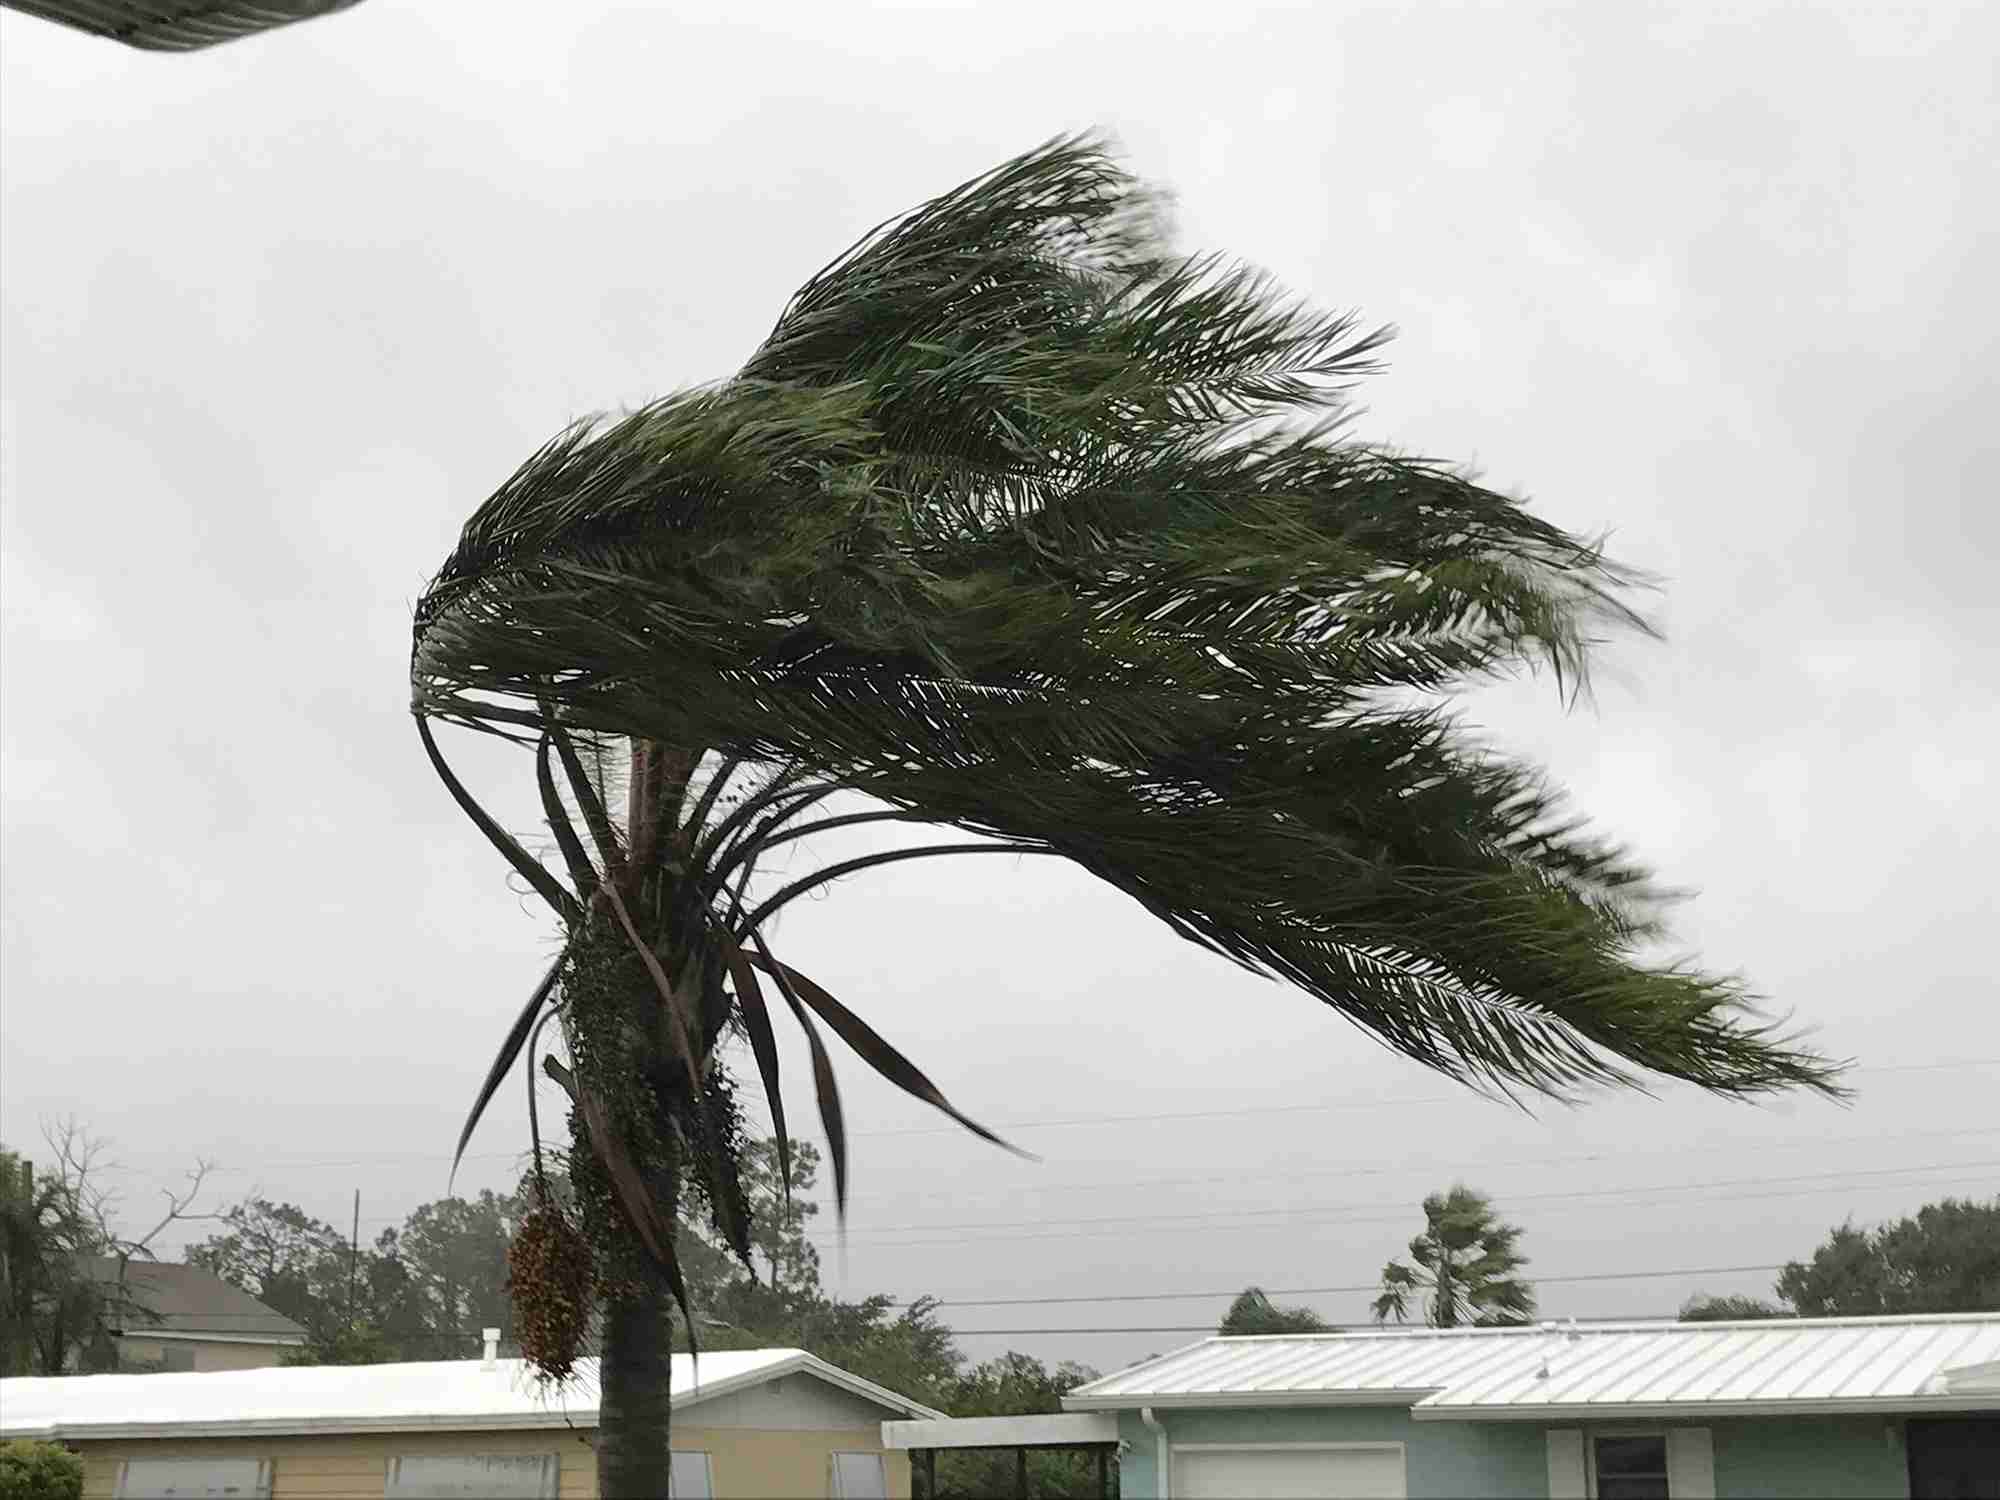 Sarasota Police Foundation Hurricane Relief Efforts